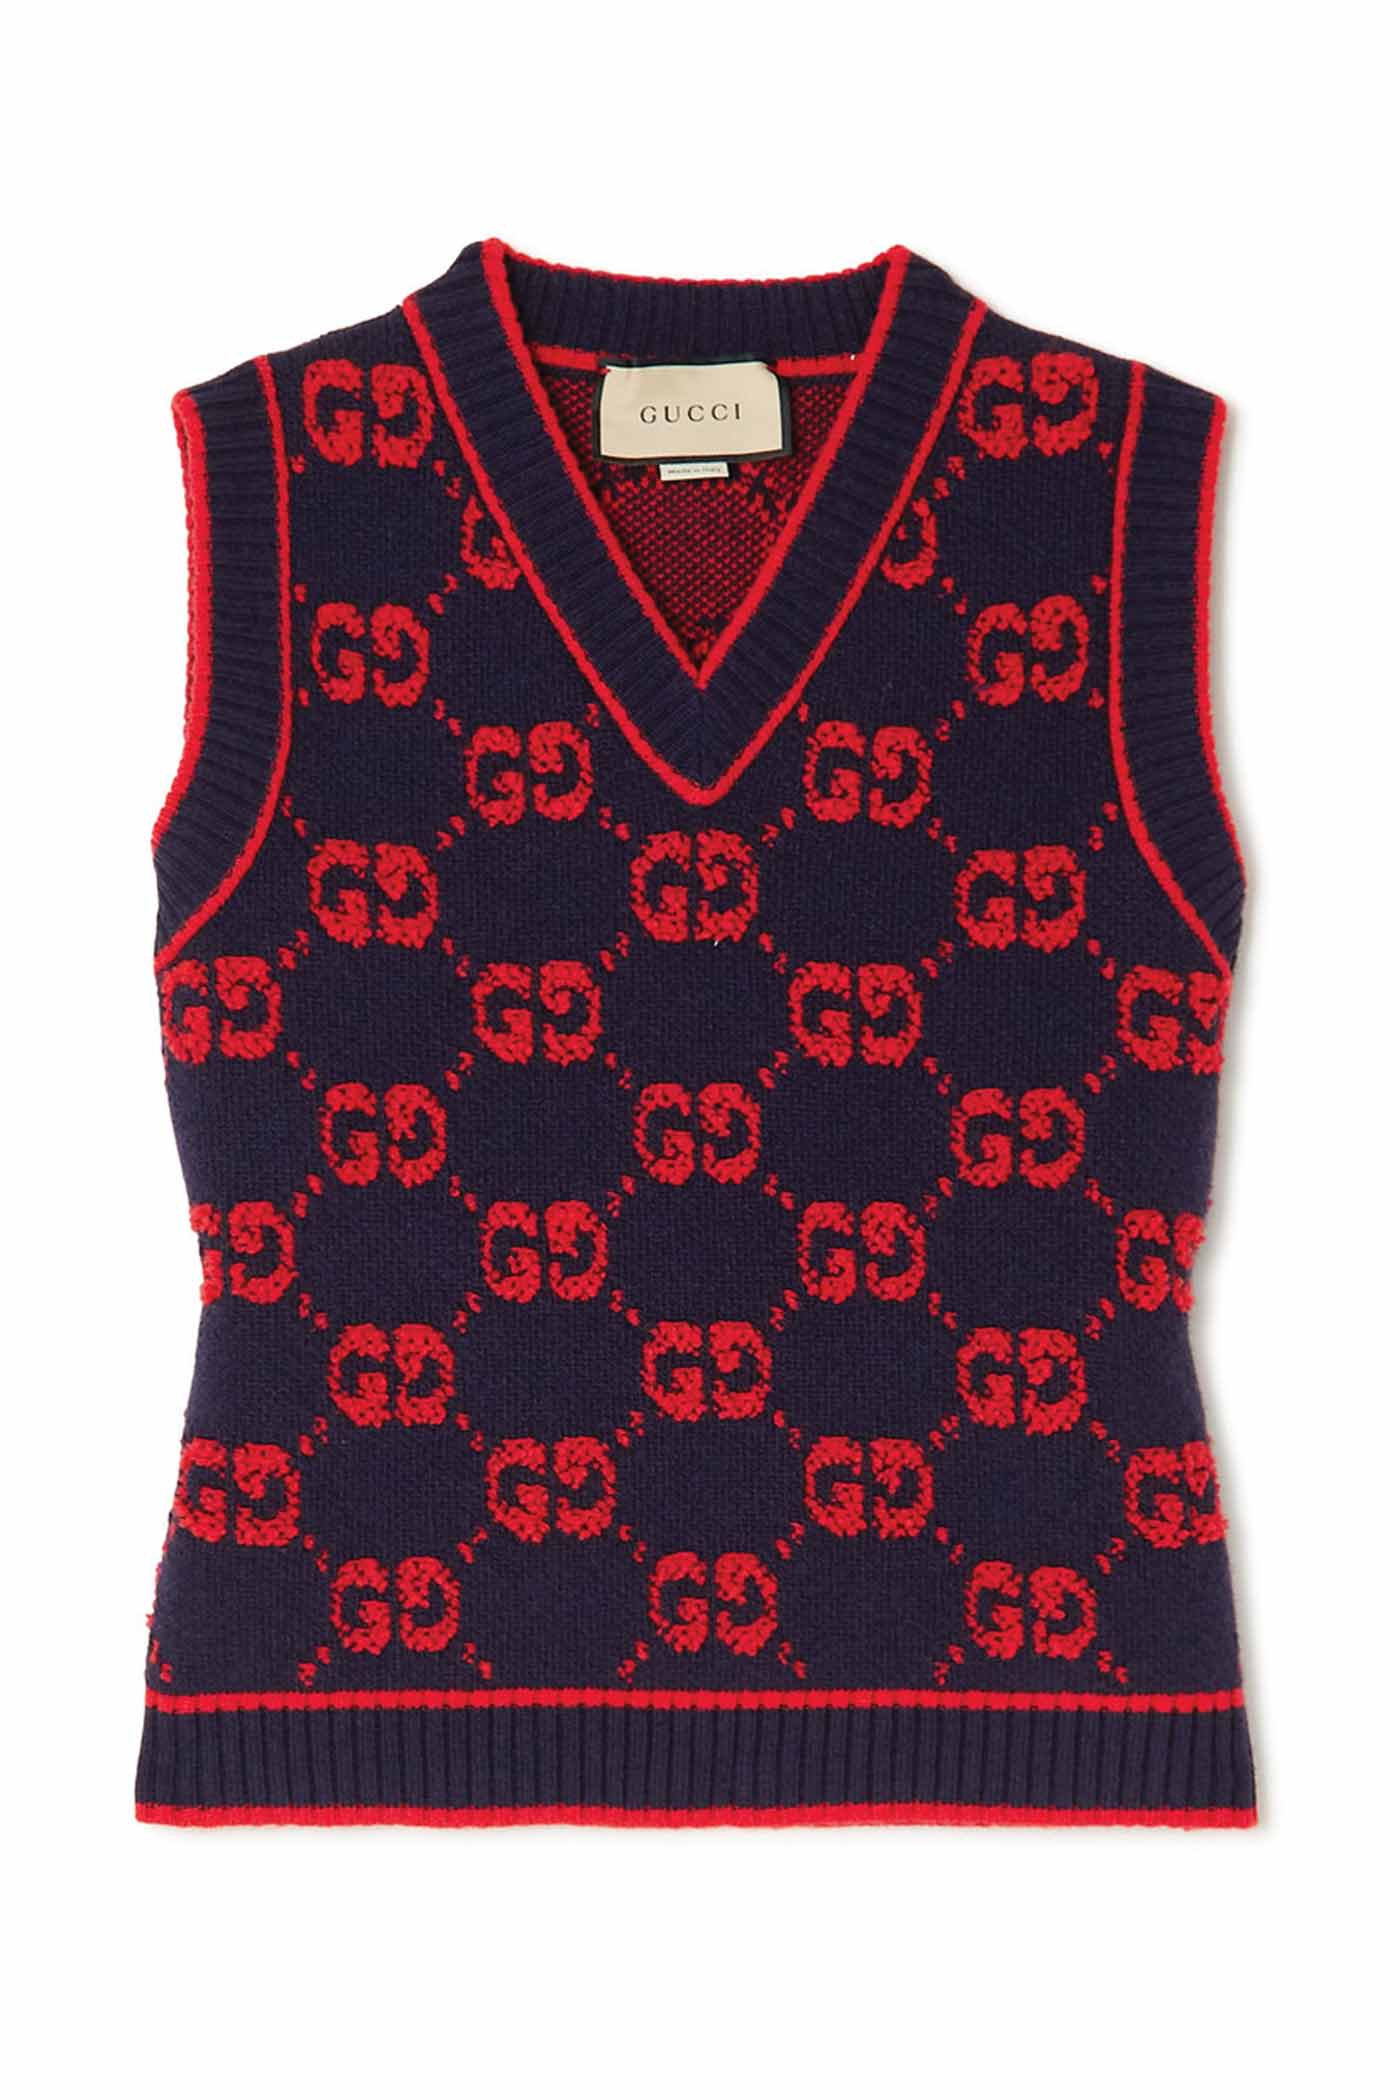 Gucci, Wool Jacquard Vest, Net A Porter